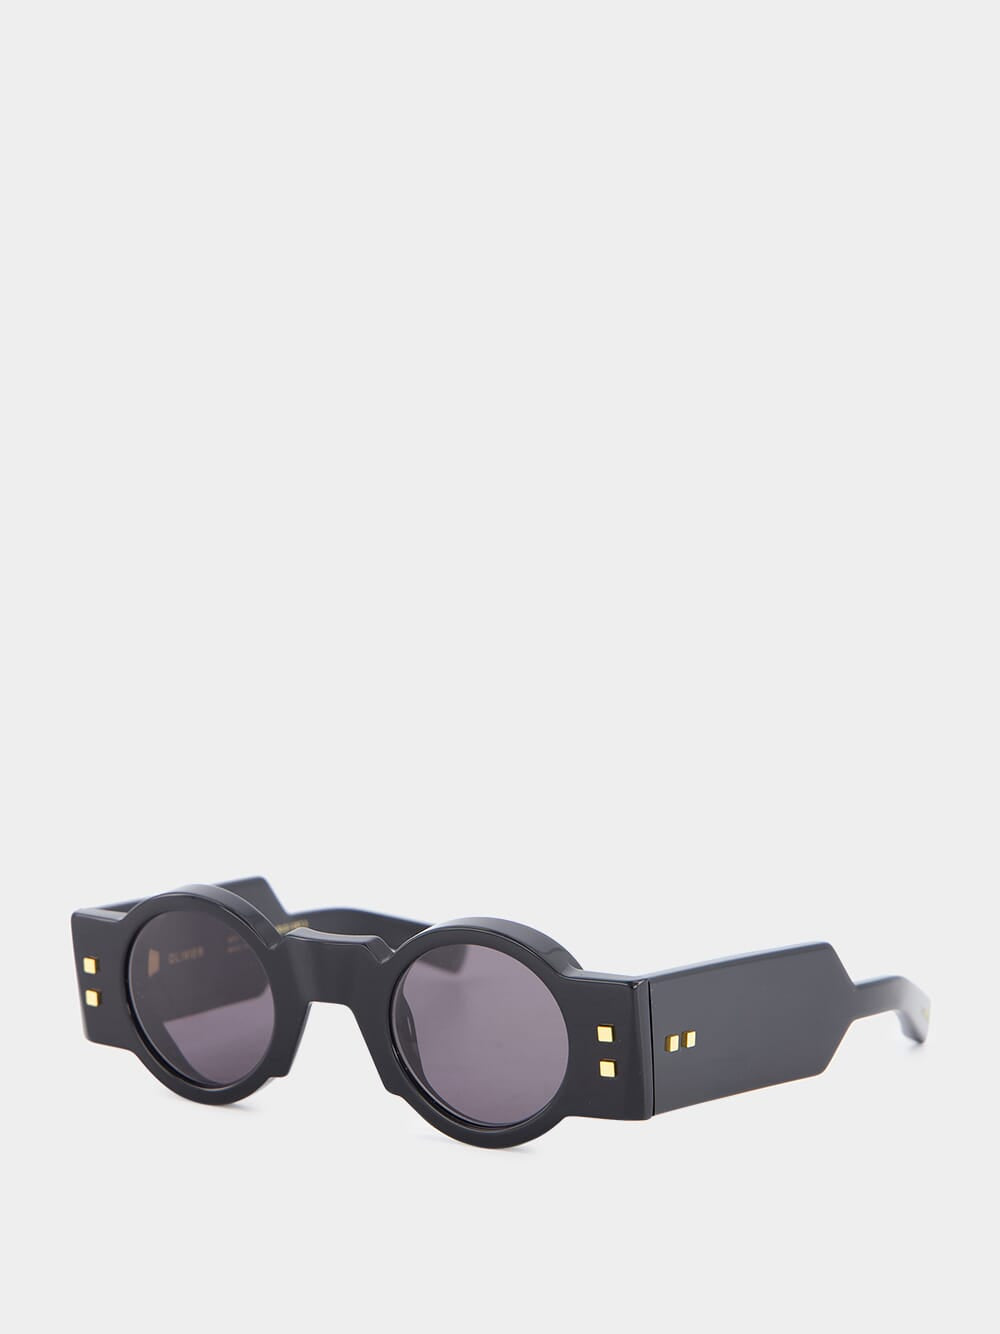 Olivier Black Round Sunglasses